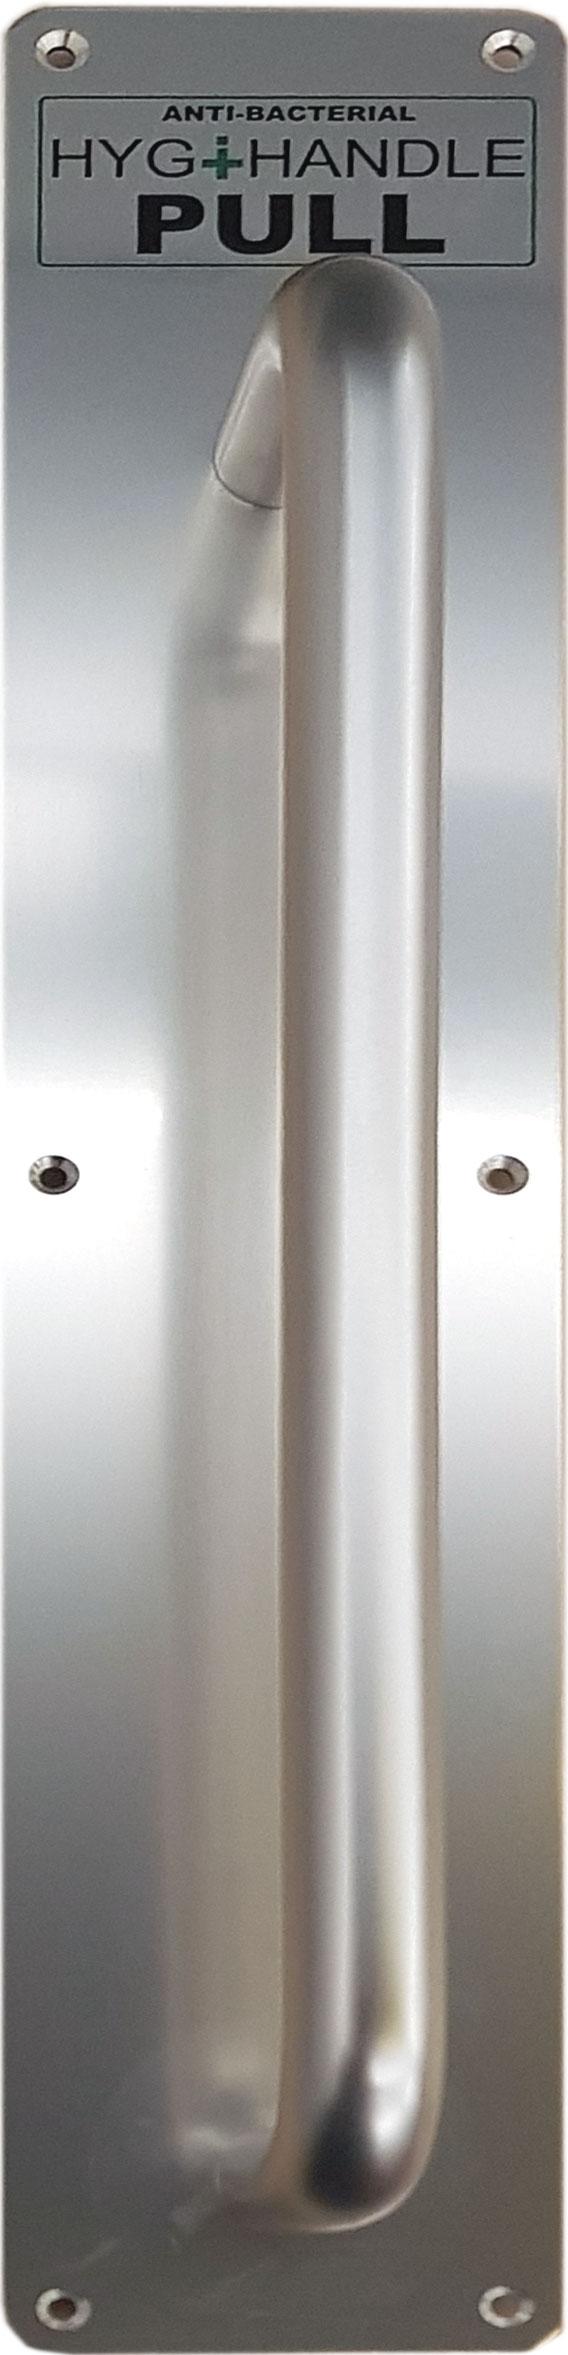 Hygi-Handle™ Antibacterial Hygienic Door handle - PULL